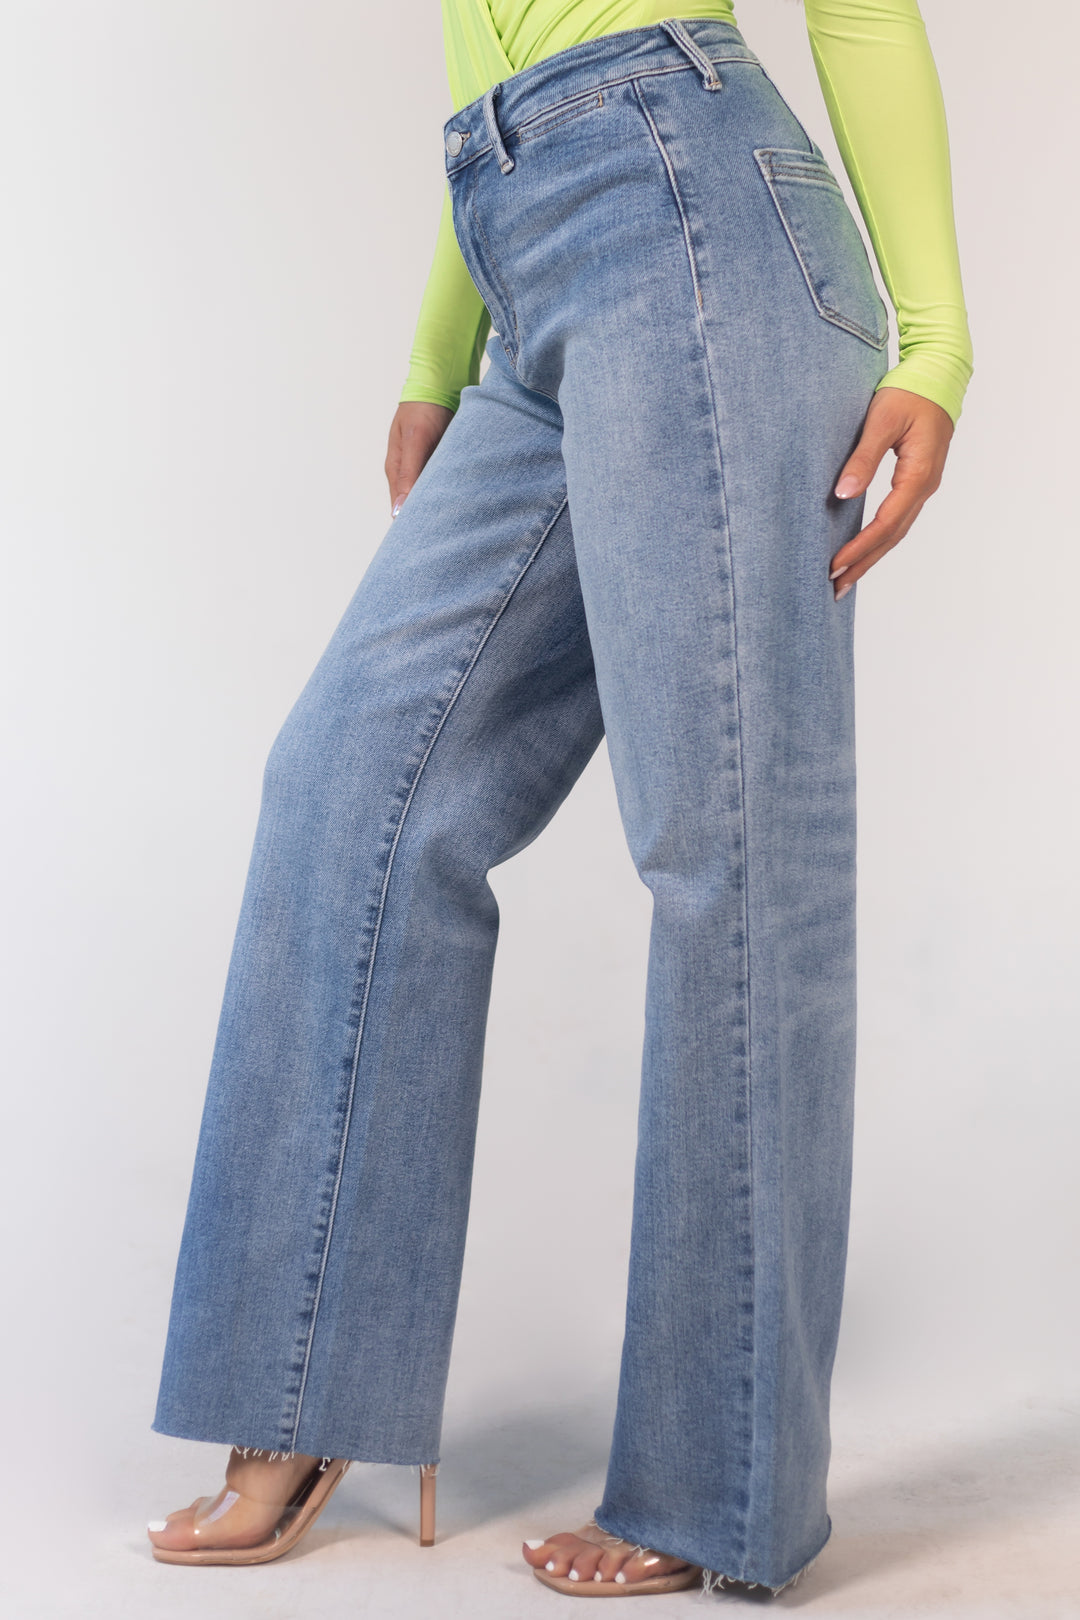 Judy Blue Light Wash High Rise Raw Hem Wide Leg Jeans & Lime Lush